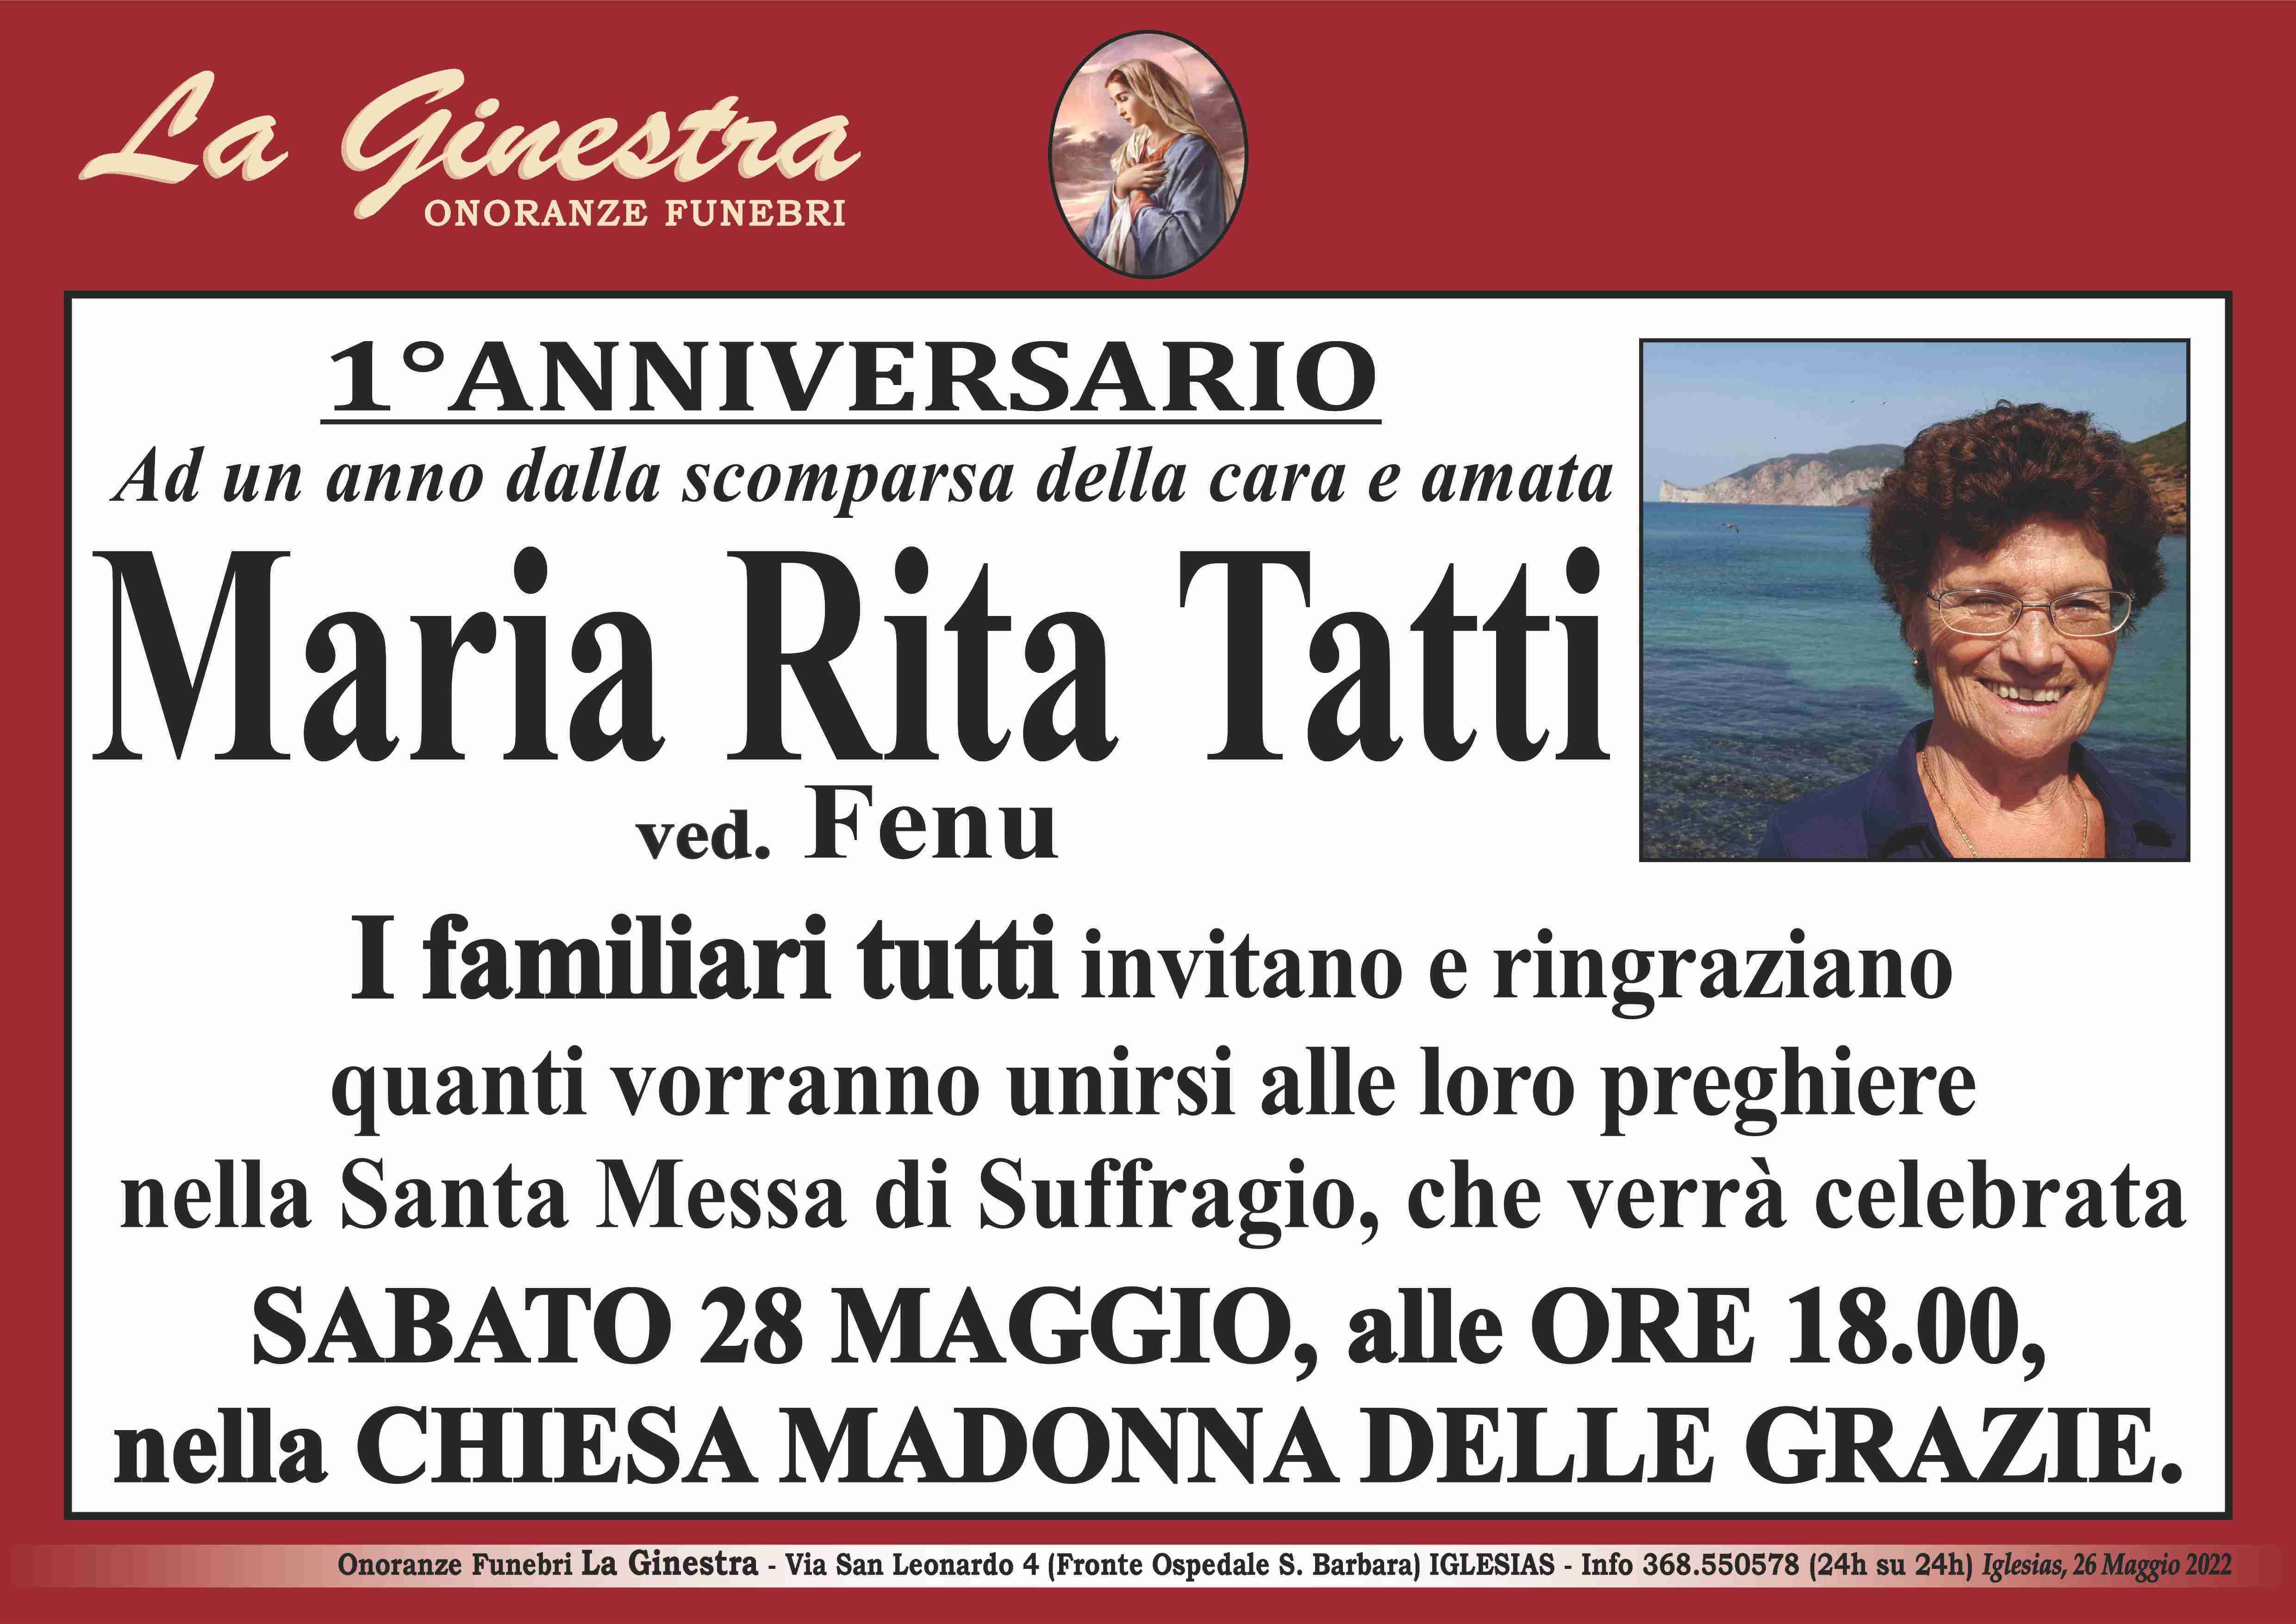 Maria Rita Tatti